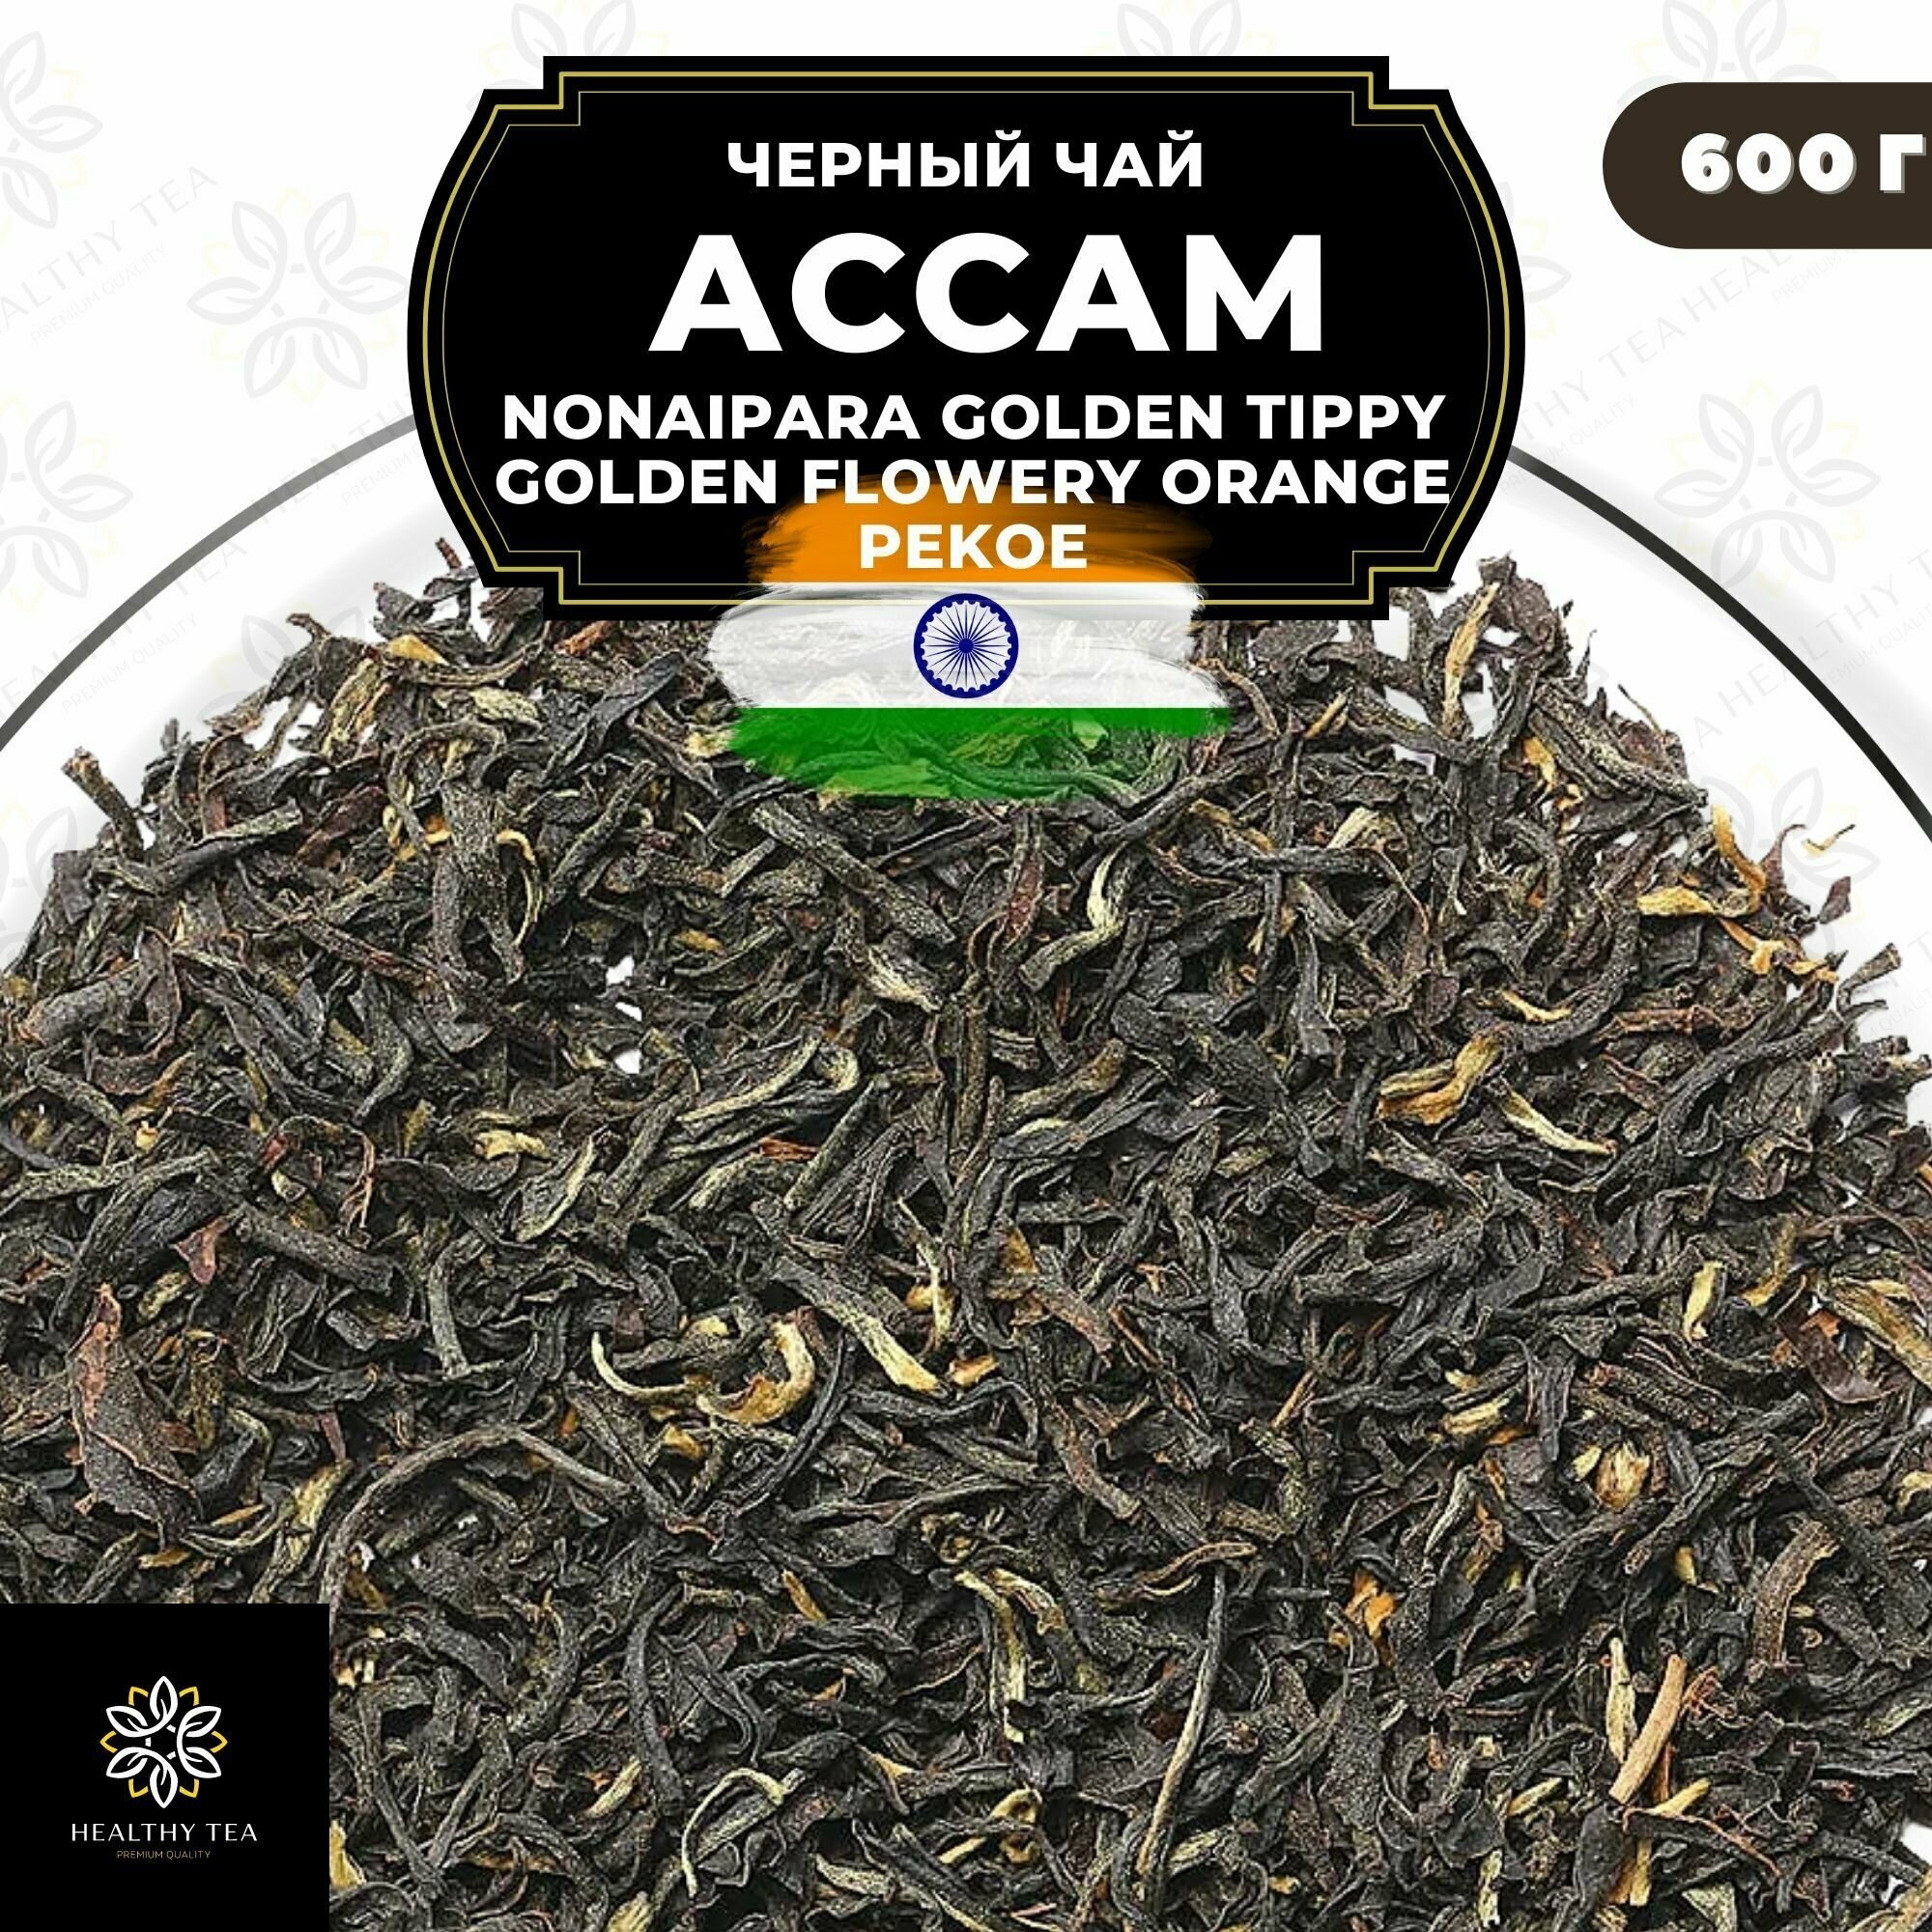 Черный чай Ассам (Nonaipara GTGFOP) Полезный чай / HEALTHY TEA, 600 гр